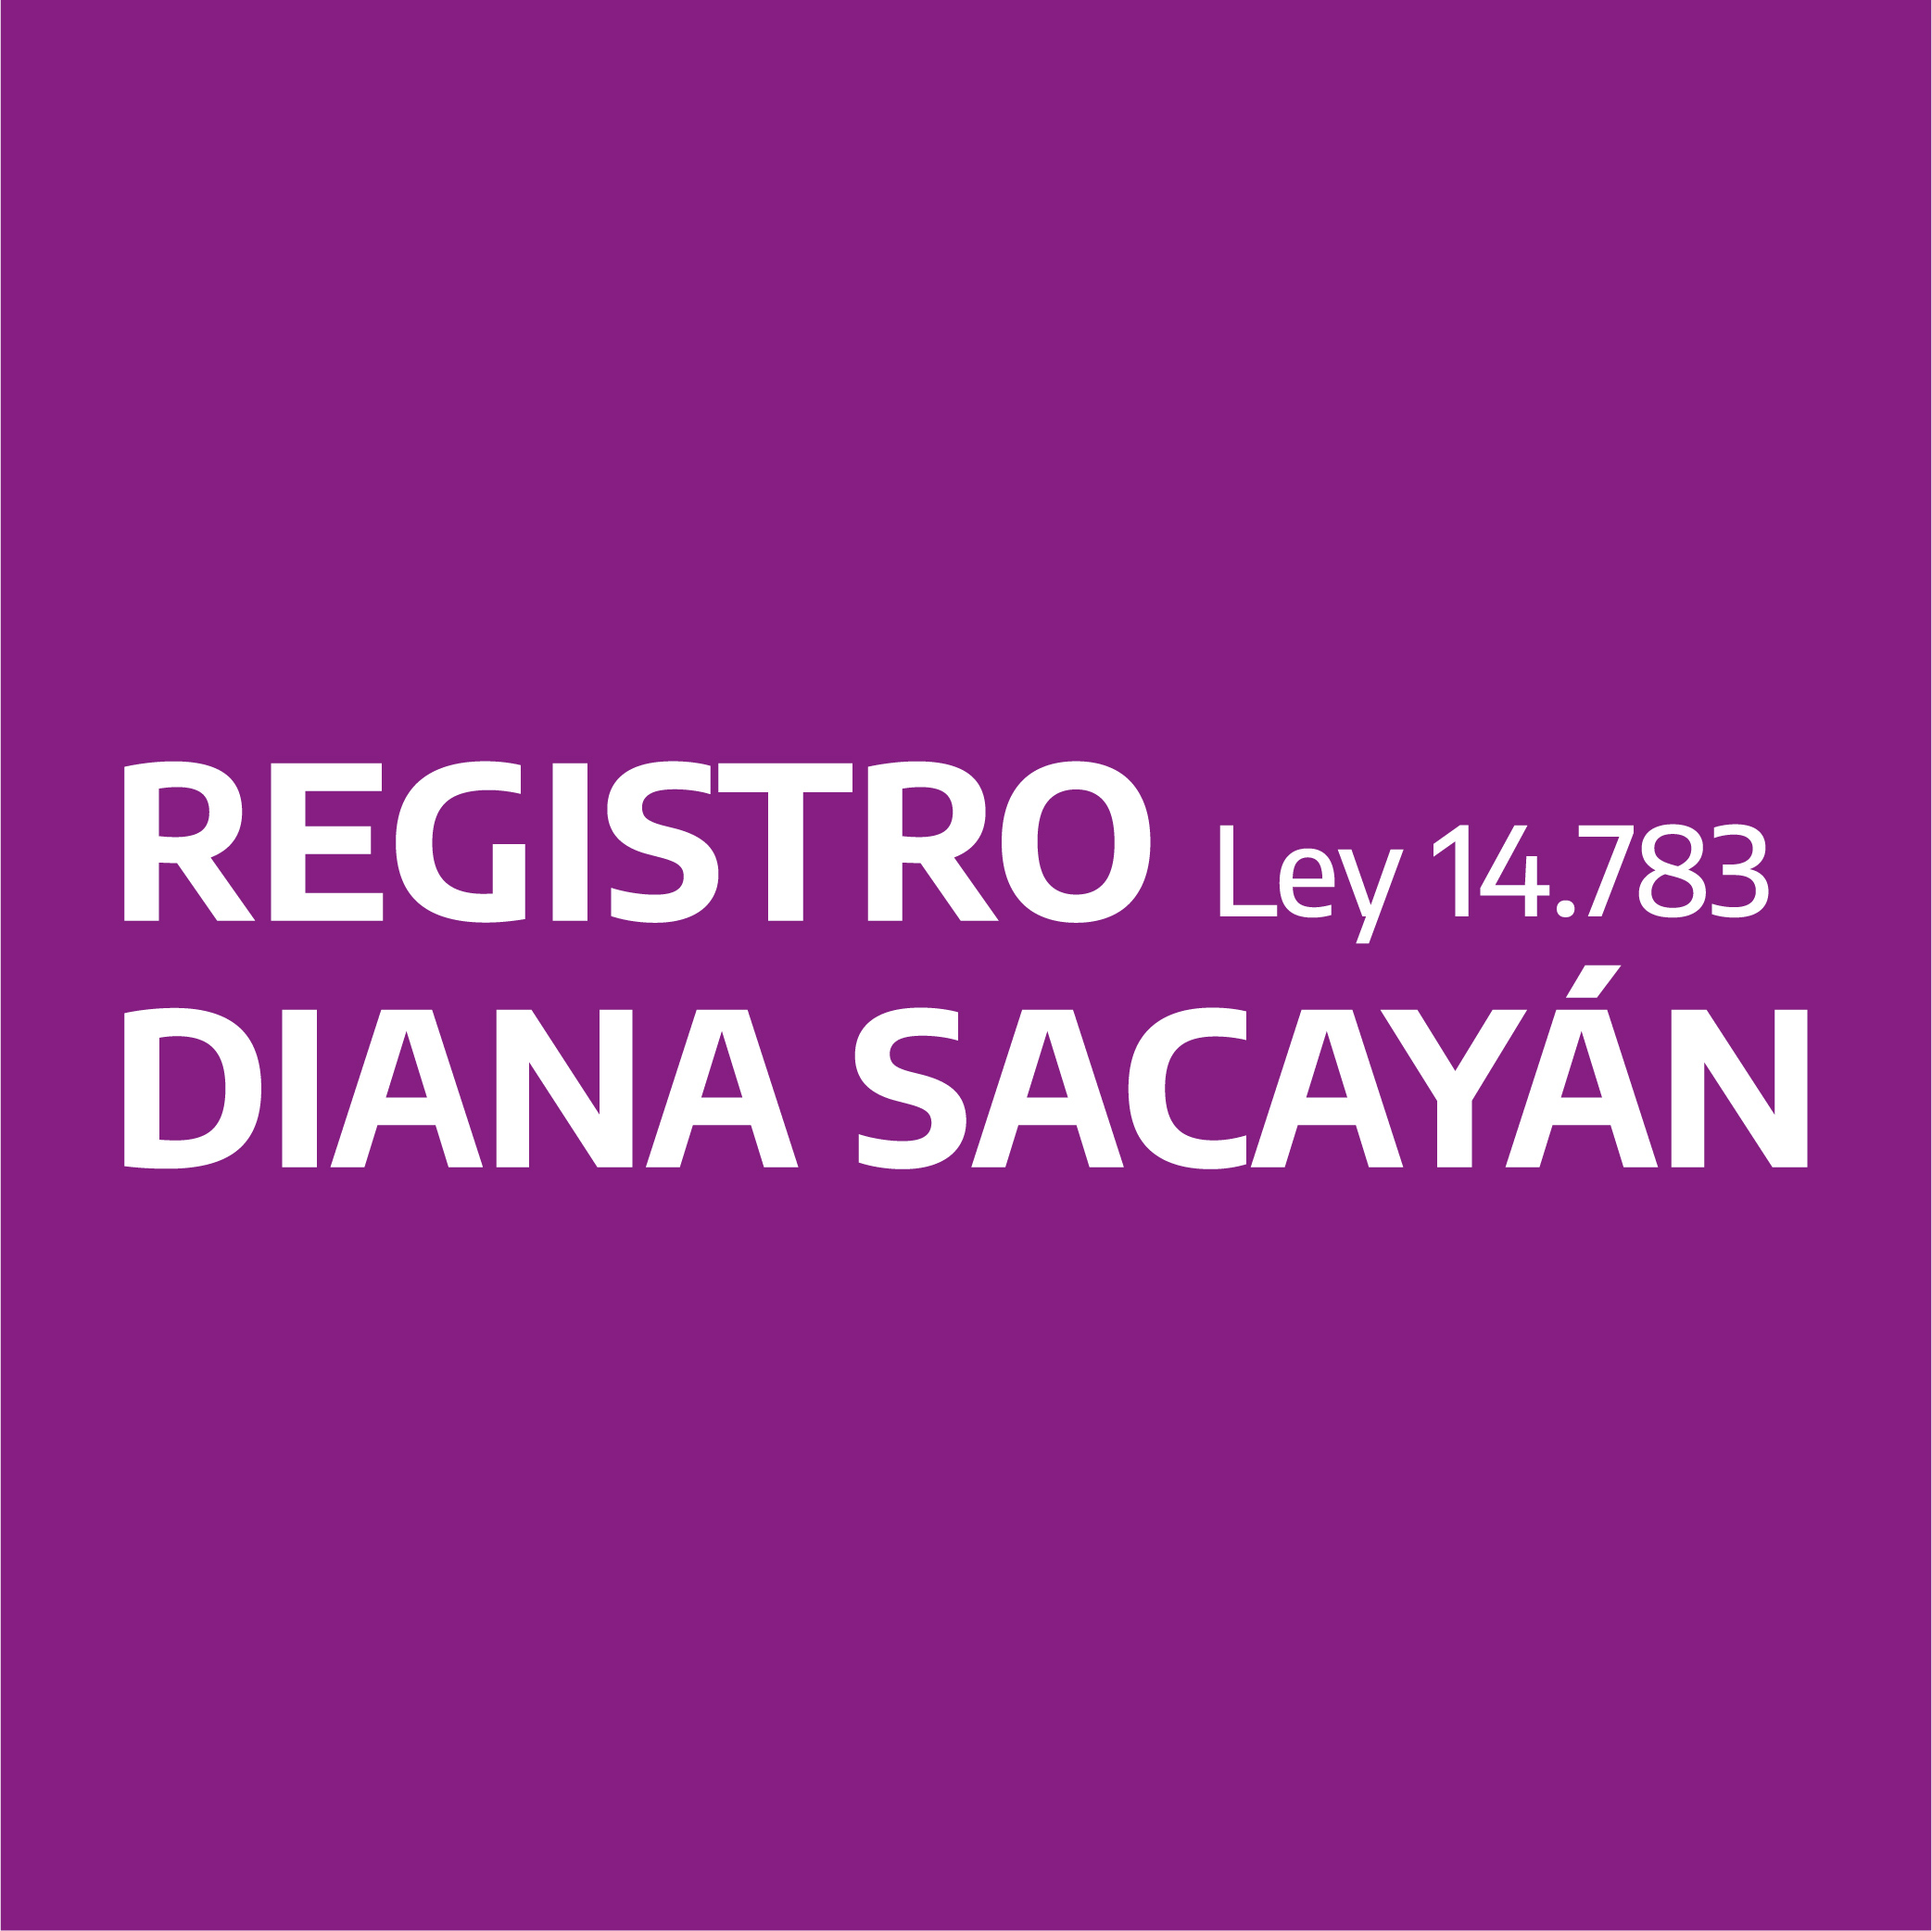 Registro Diana Sacayán